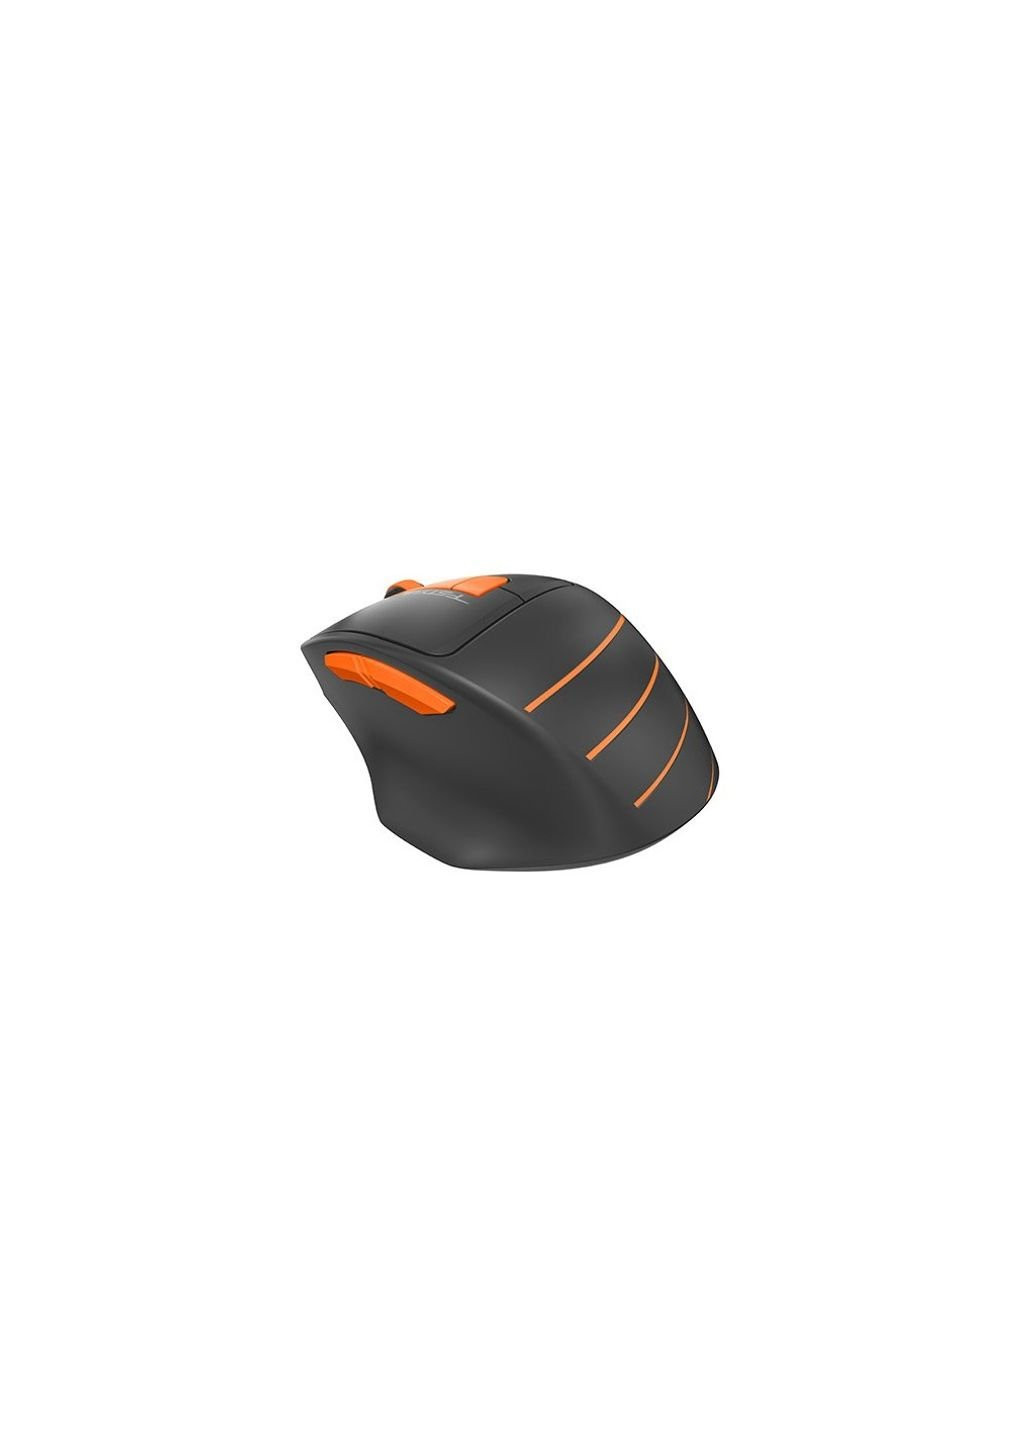 Мышка FG30 Orange A4Tech (253546142)